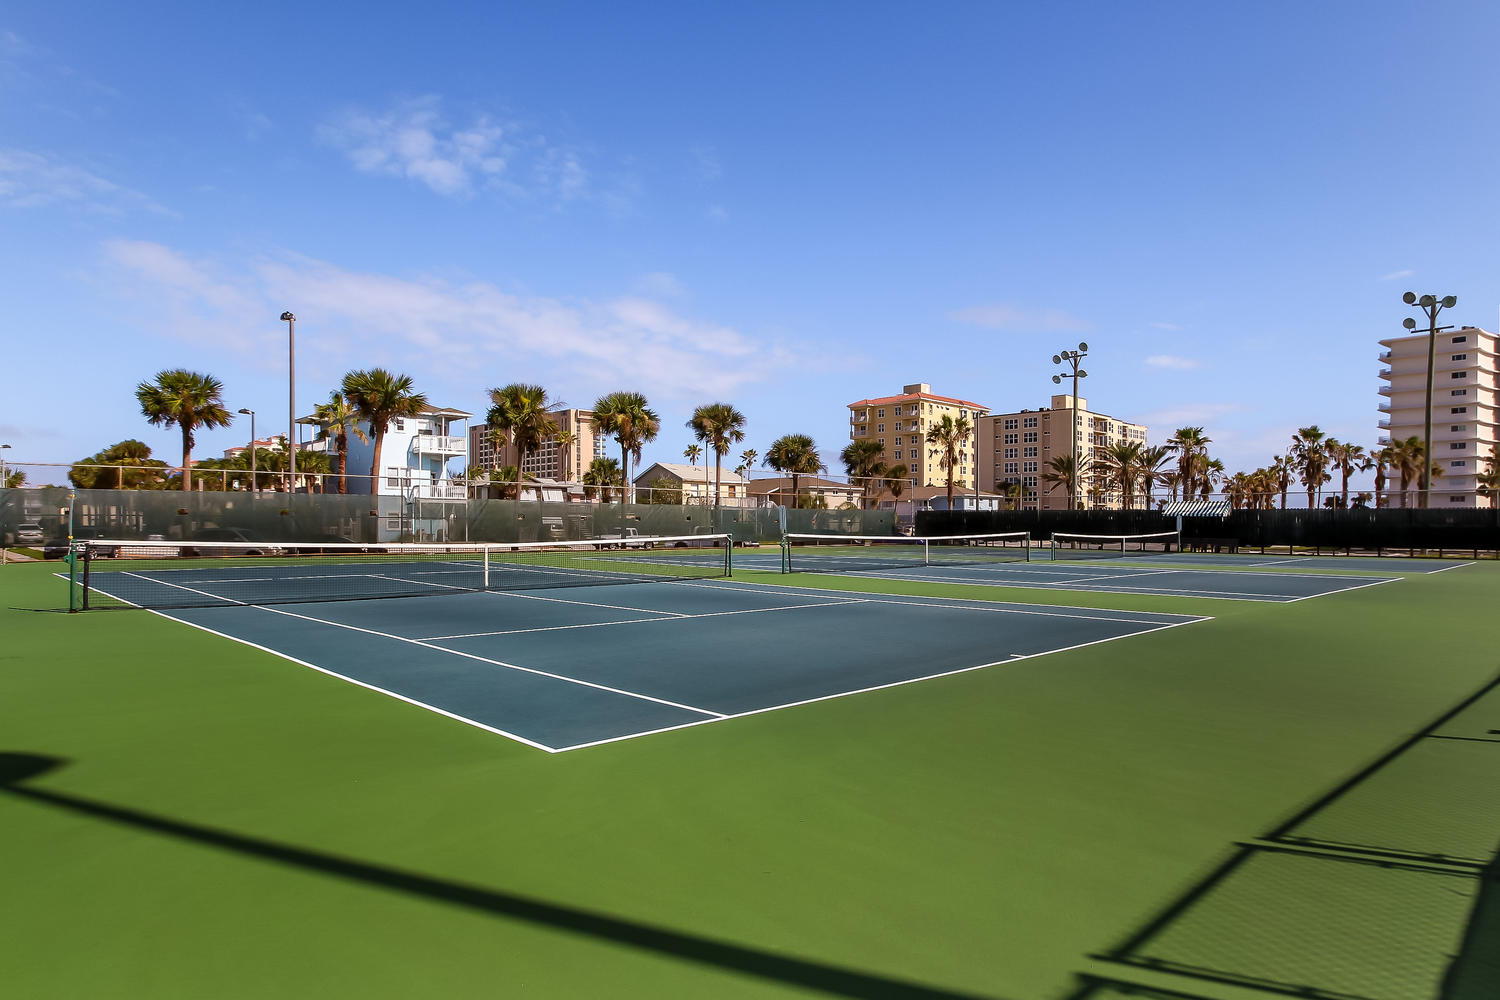 Nearby Tennis Center